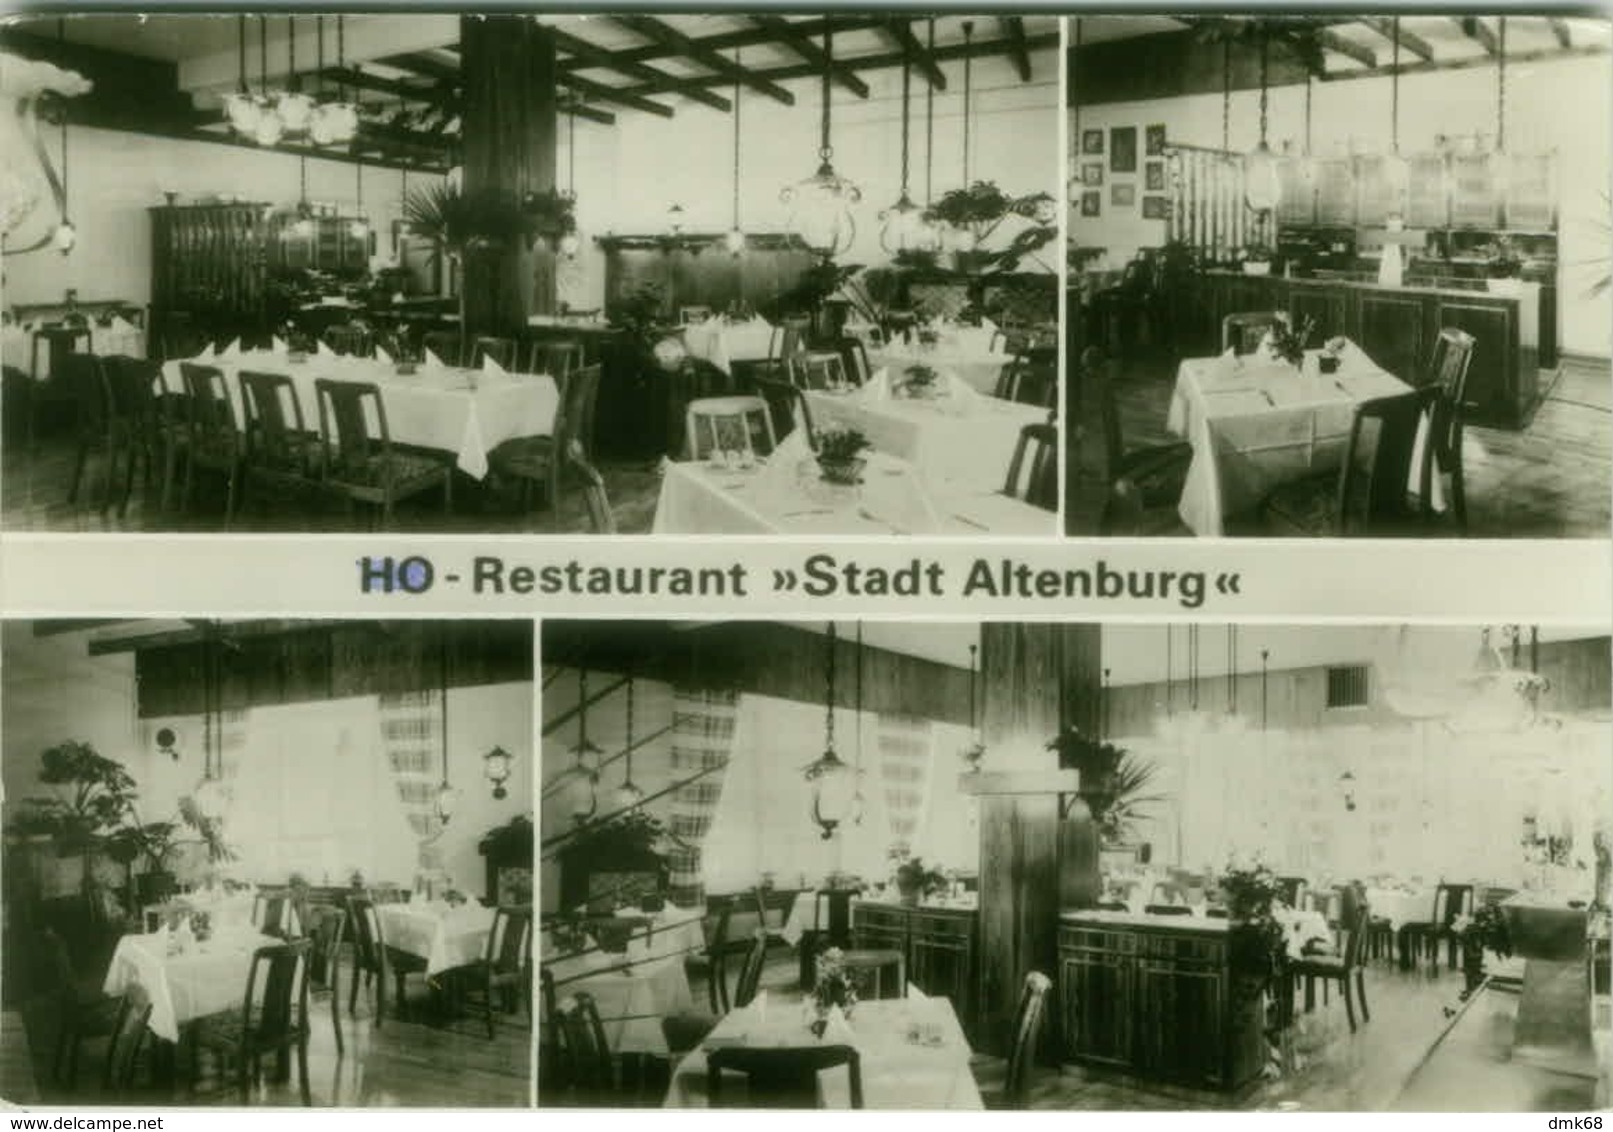 AK GERMANY - LIMBACH-OBERFROHNA - HO RESTAURANT STADT ALTENBURG - 1960s  (BG9591) - Limbach-Oberfrohna